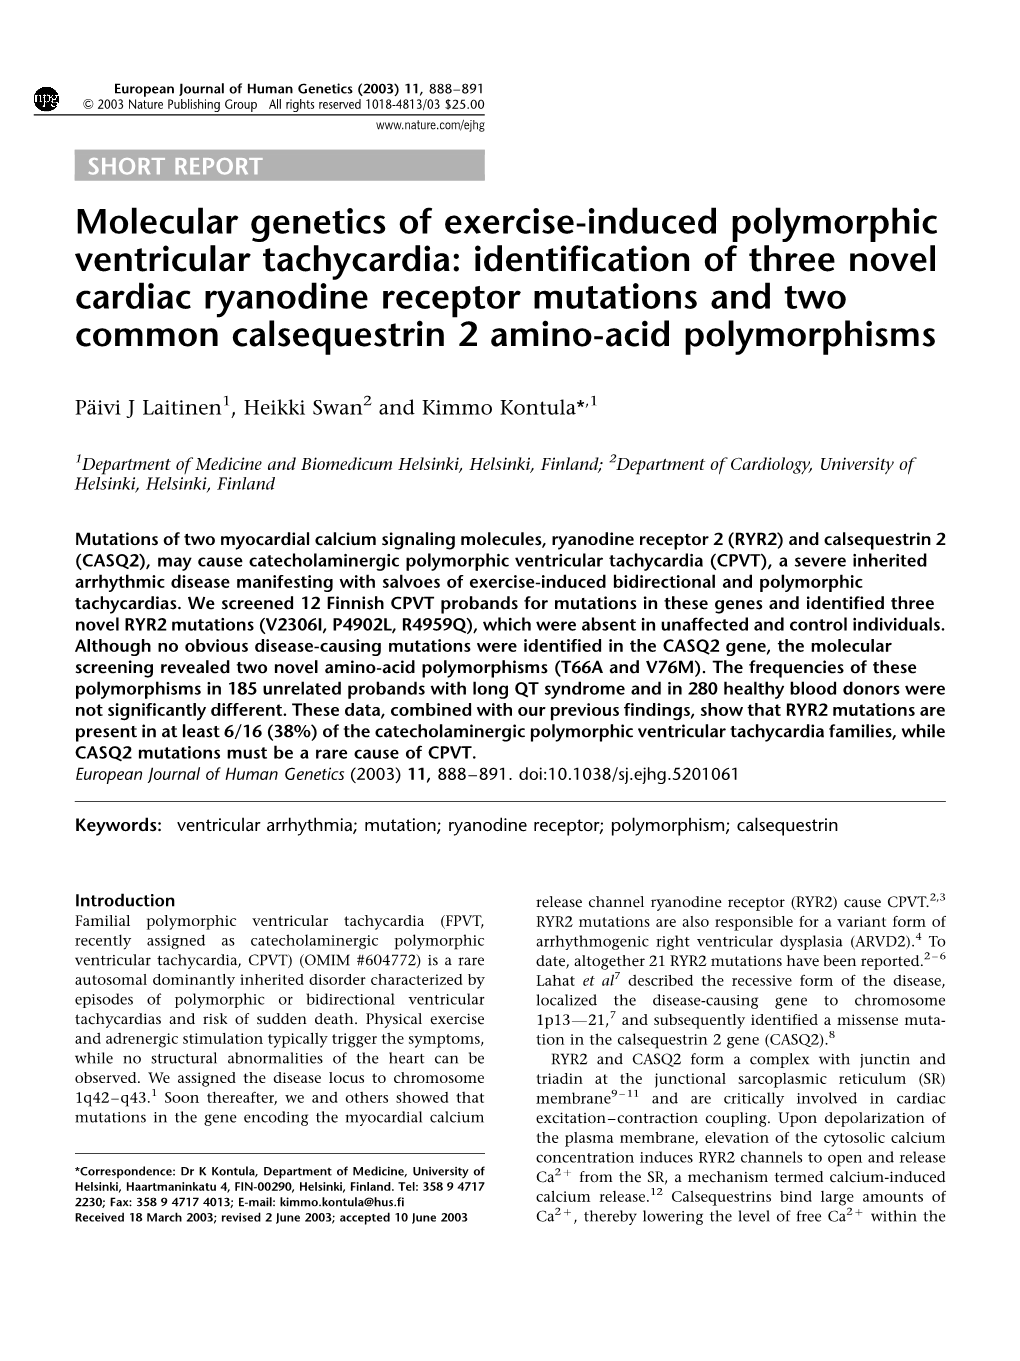 Molecular Genetics of Exercise-Induced